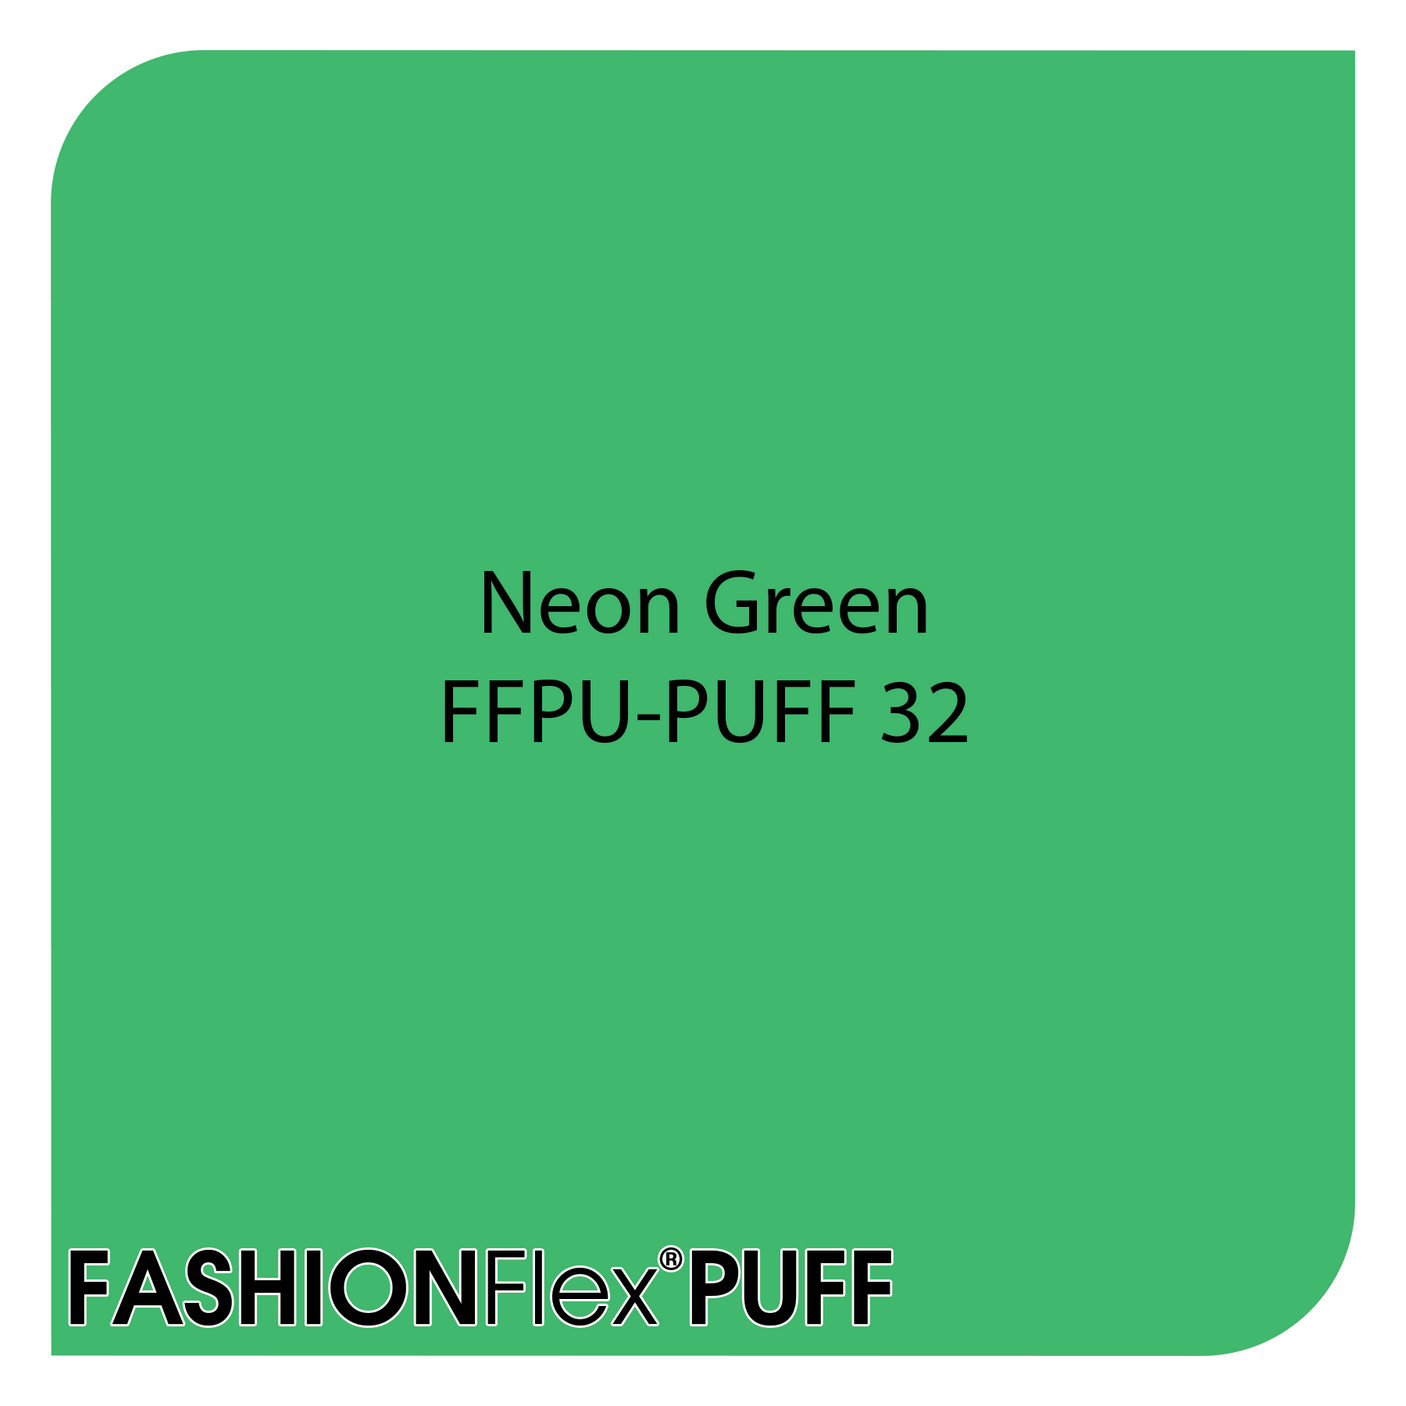 FASHIONFLEX® PUFF - 12" x 20" Sheet